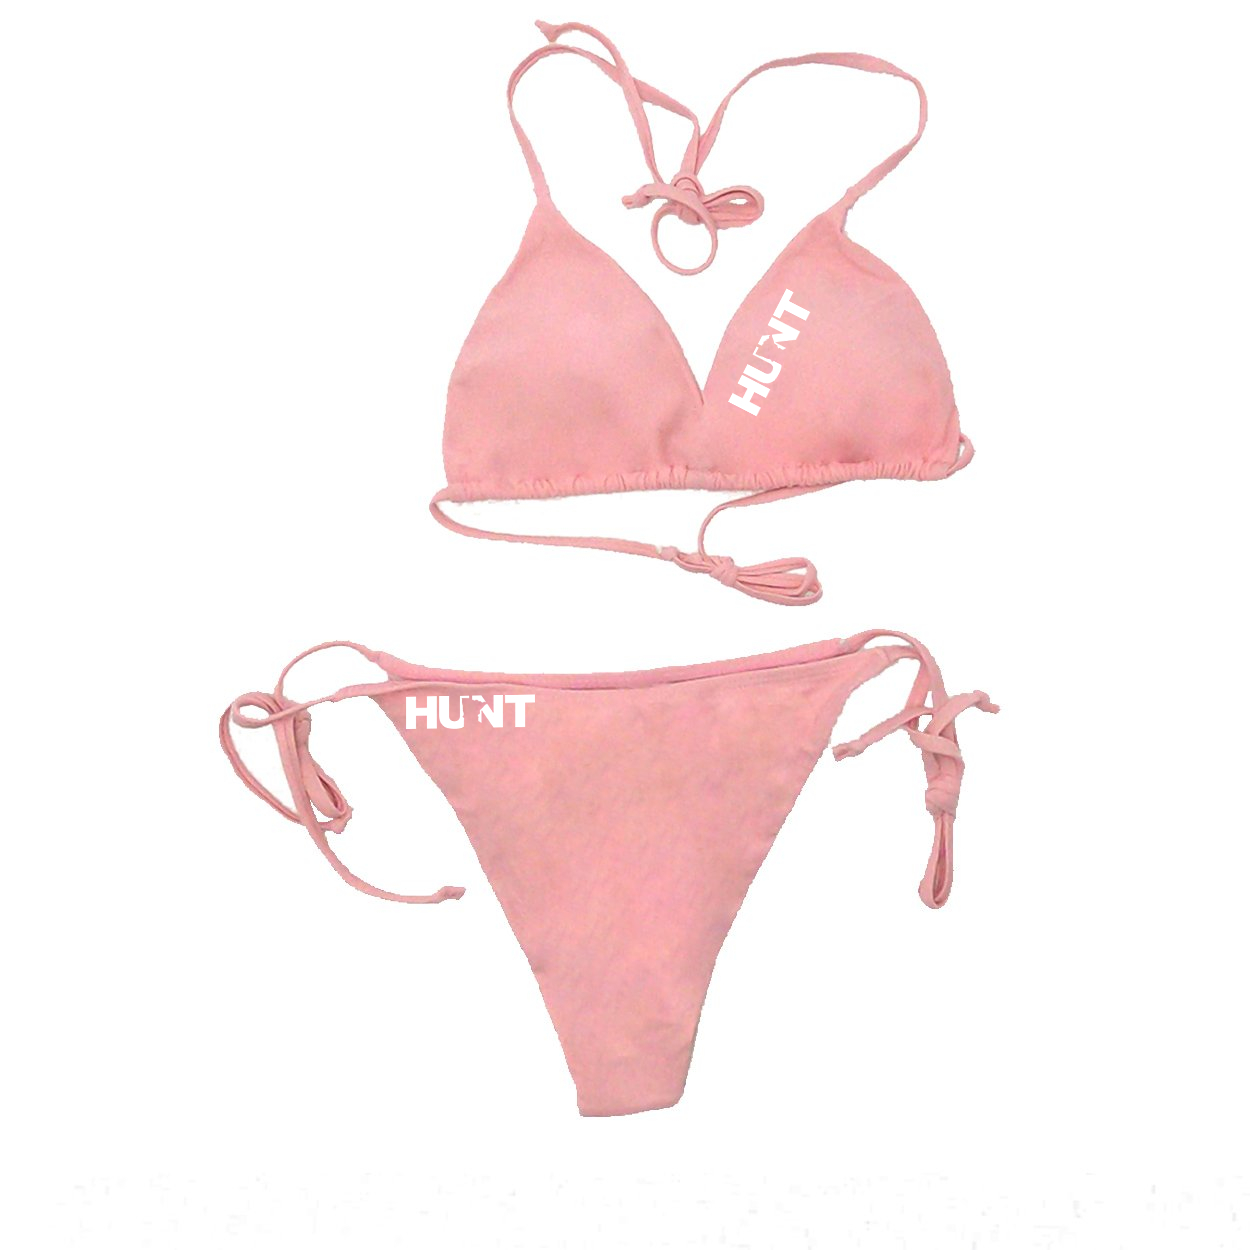 Hunt Minnesota Classic Womens Padded Halter Triangle Tie Side Two-Piece Swimsuit Basics Bikini Pink (White Logo)